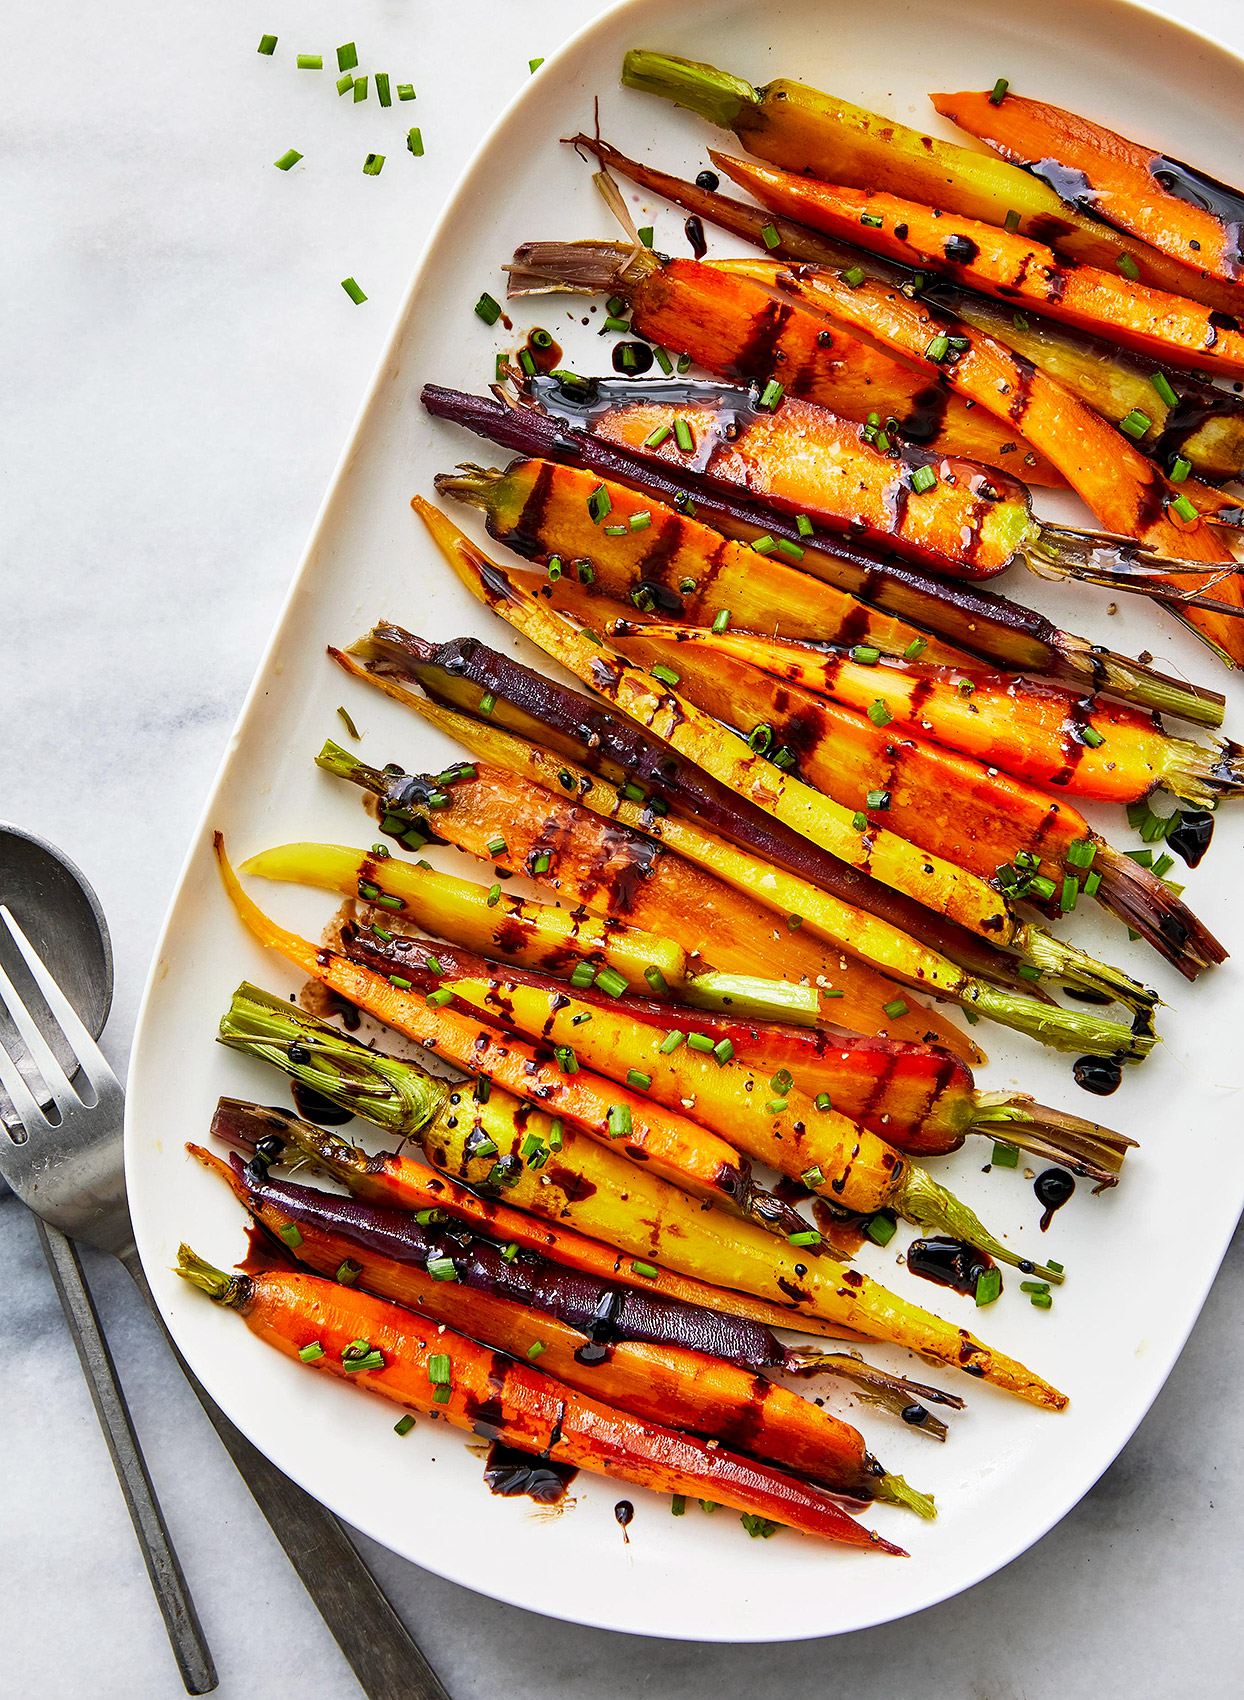 Balsamic Glazed Carrots Pic